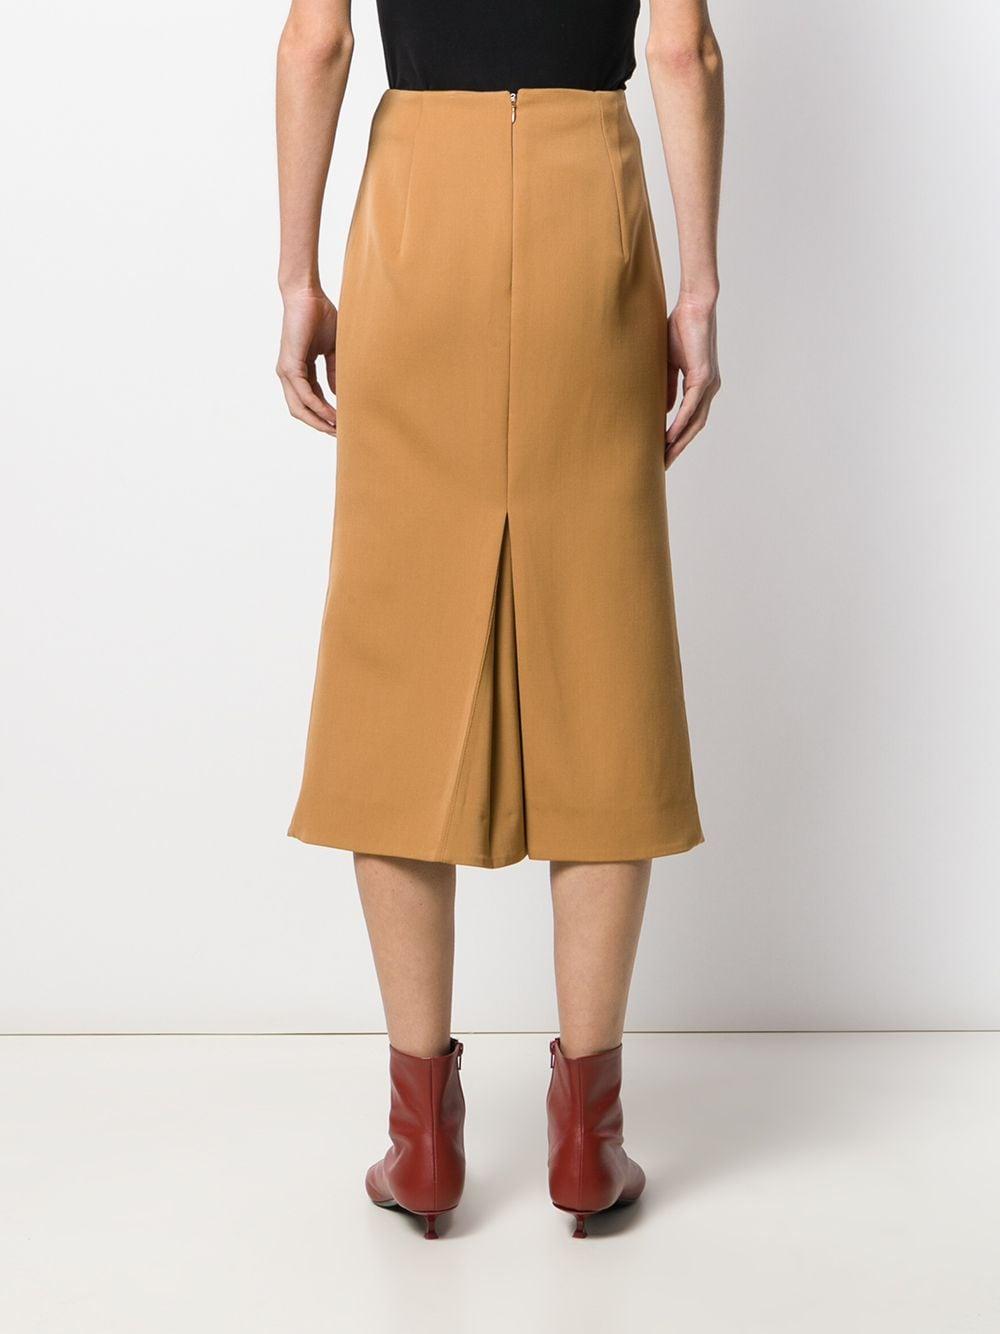 Victoria Beckham Wool Pleated Details Midi Skirt in Brown - Lyst